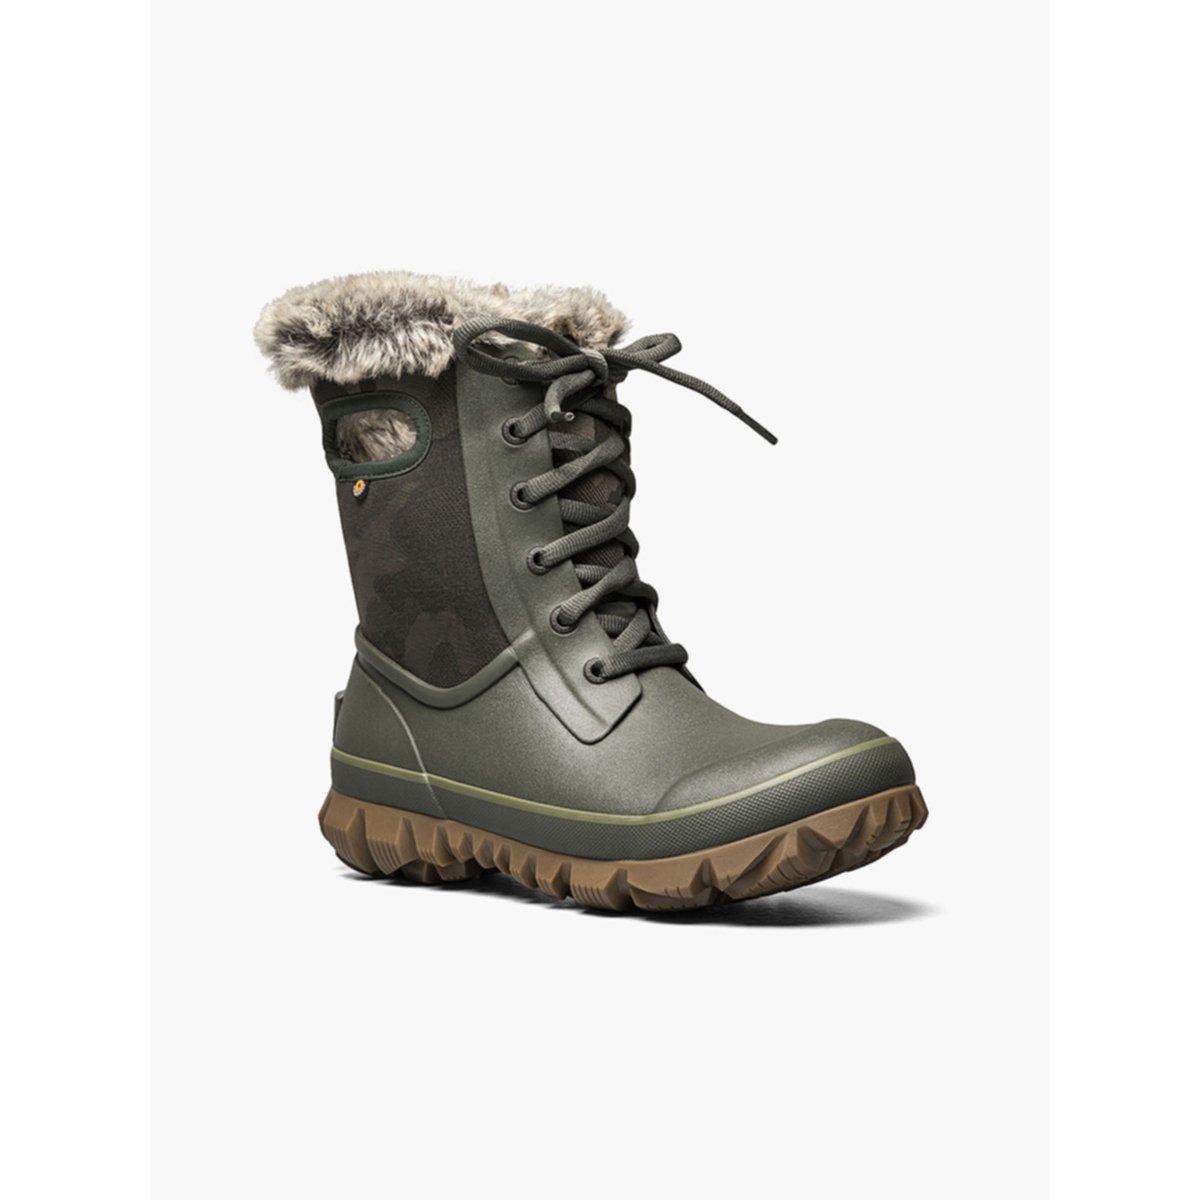 BOGS Women's Arcata Tontal Camo Waterproof Lace Up Snow Boots Dark Green - 72693-301 - Dark Green, 7